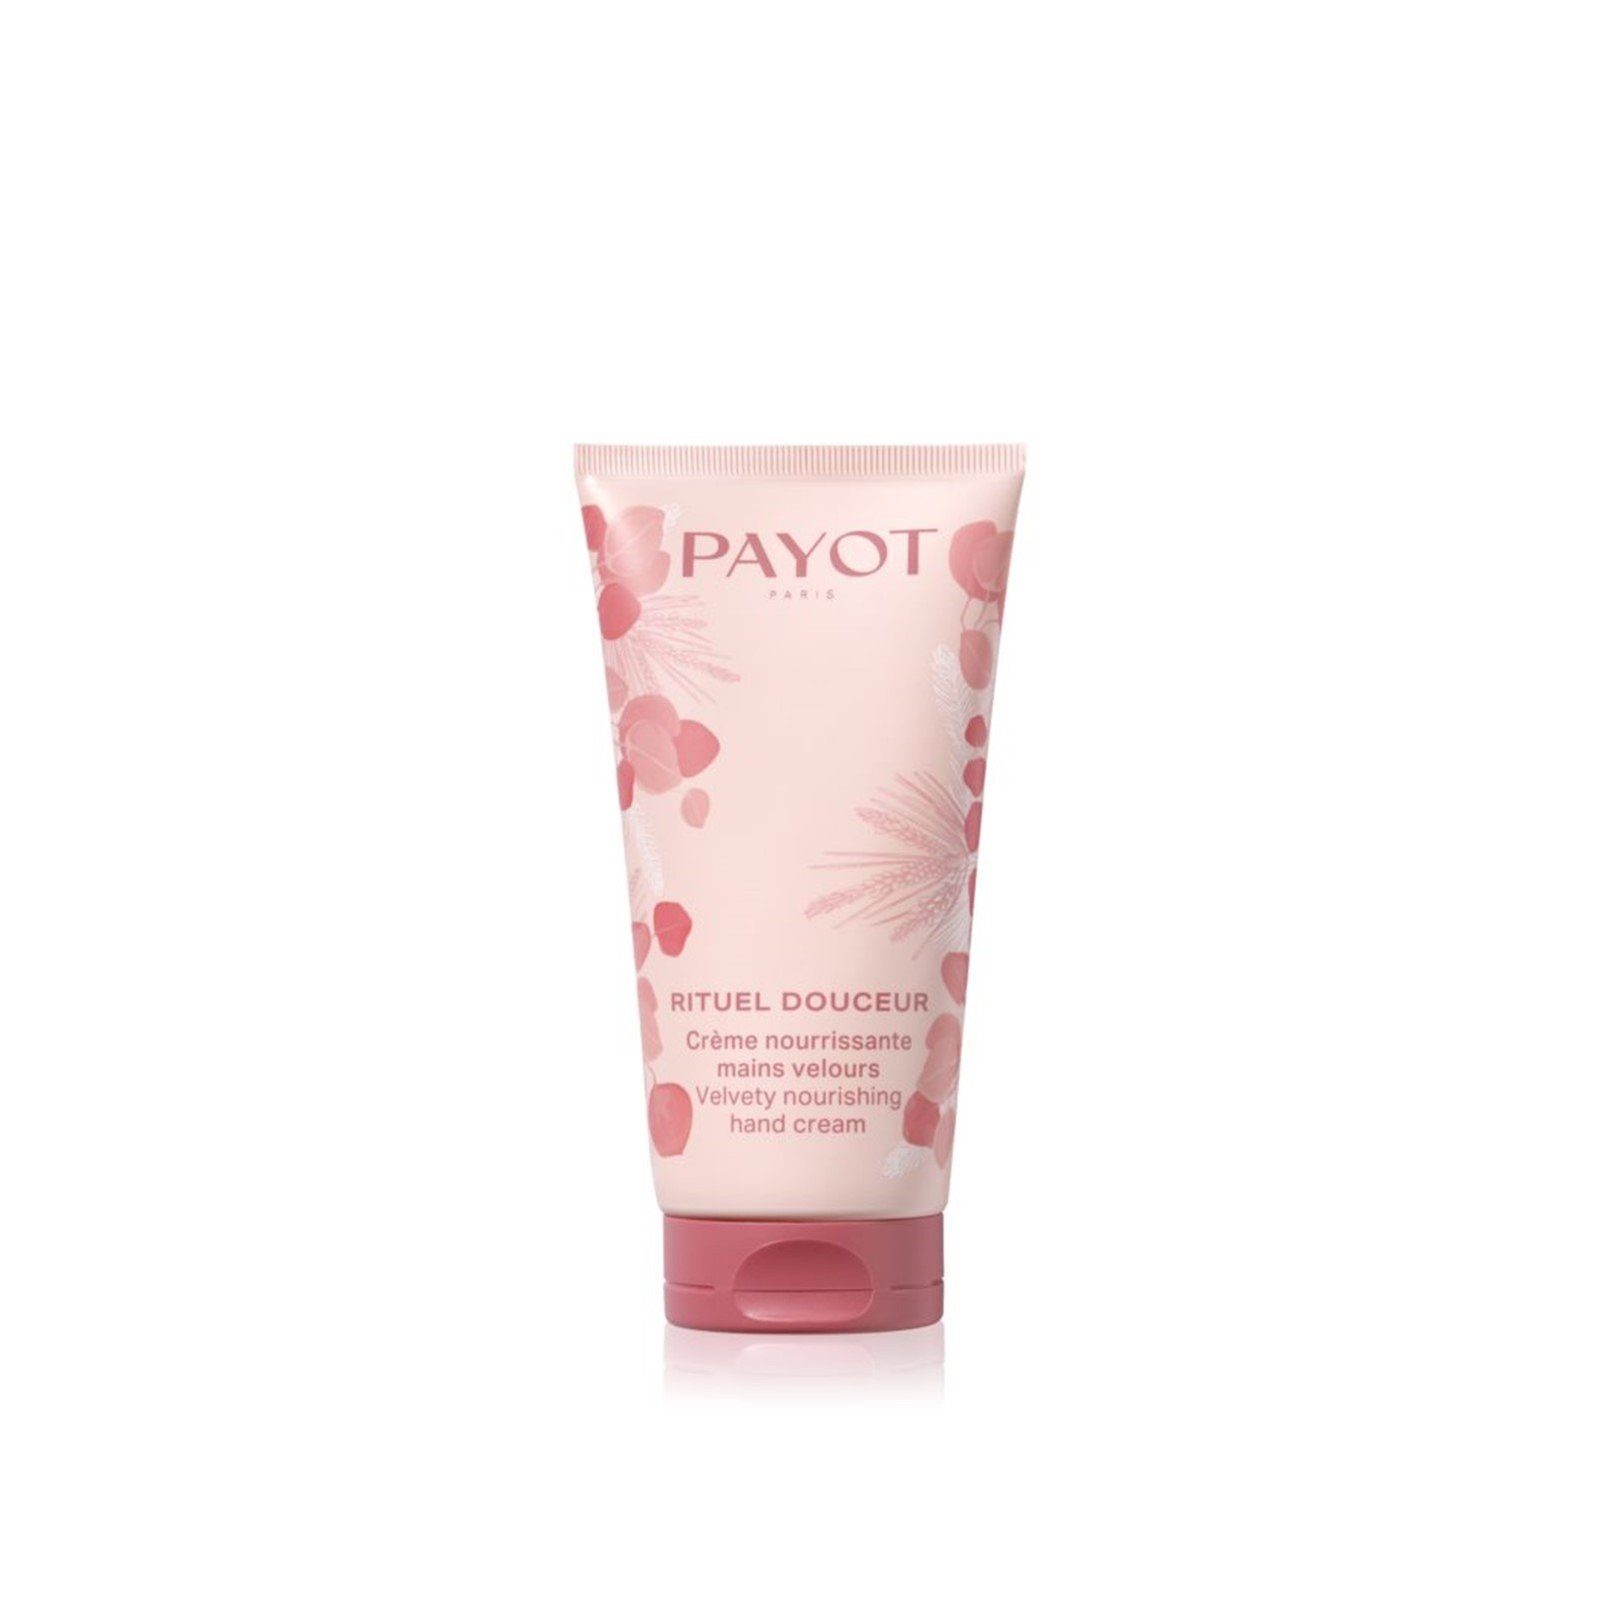 Payot Rituel Douceur Velvety Nourishing Hand Cream 75ml (2.5 fl oz)